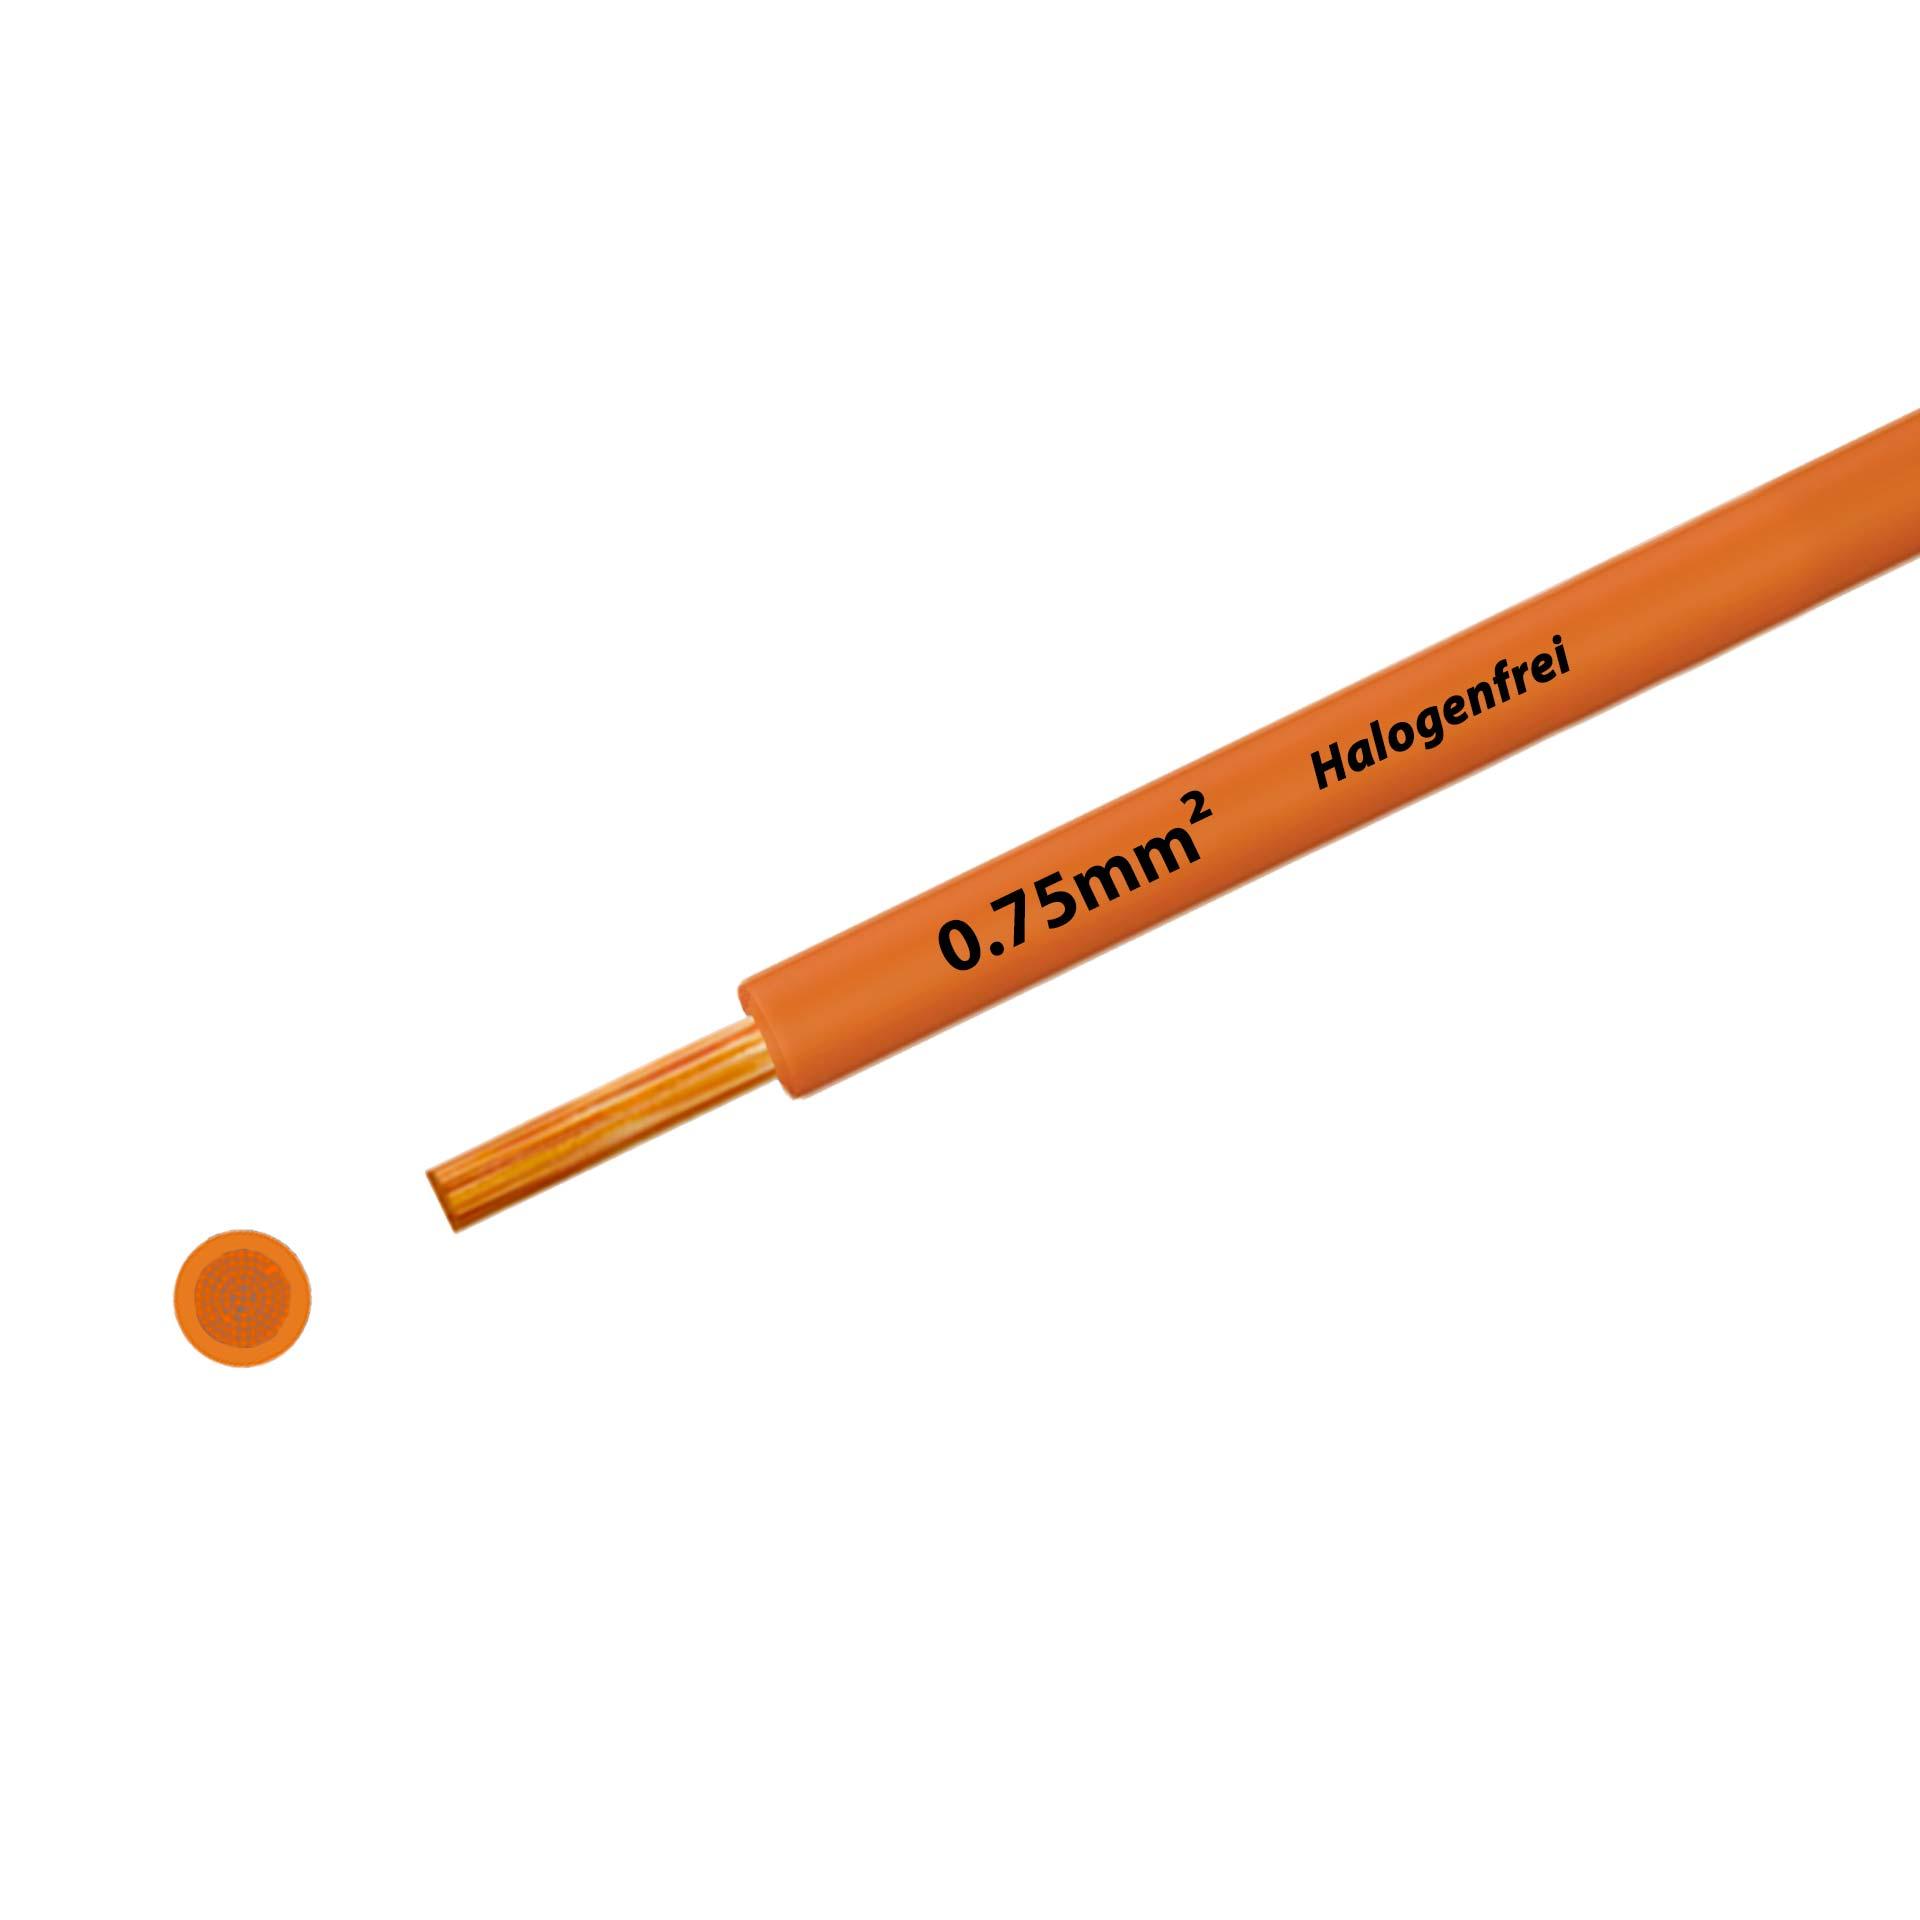 Litze halogenfrei 90° C , 500V, 0.75 mm2, orange (RAL 2003), auf Kunststoffrolle